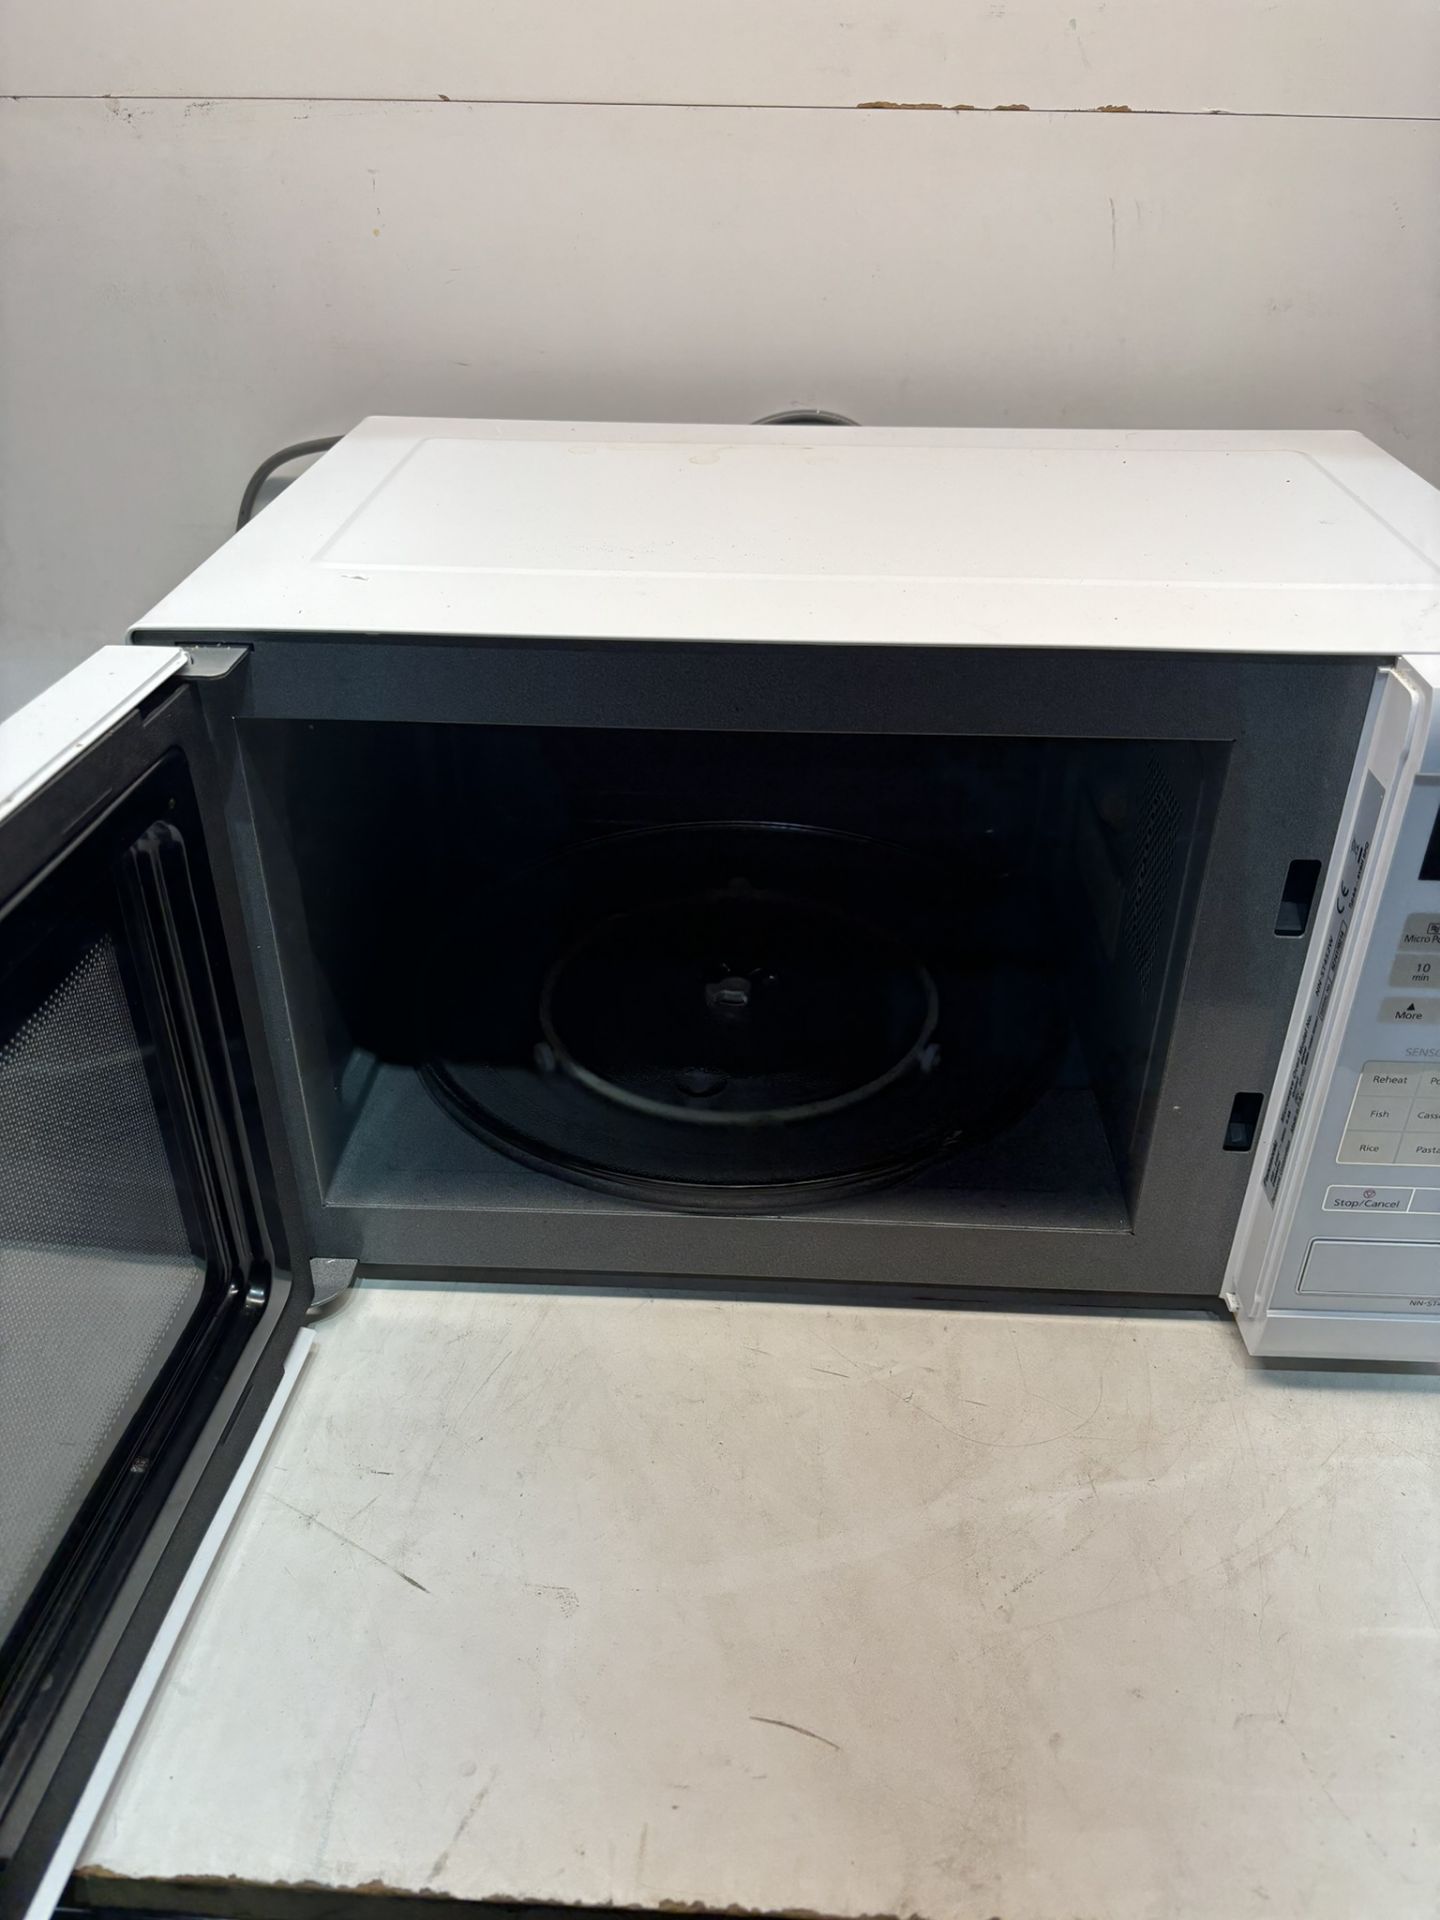 Panasonic NN-ST452W 900W Microwave Oven - Image 3 of 4